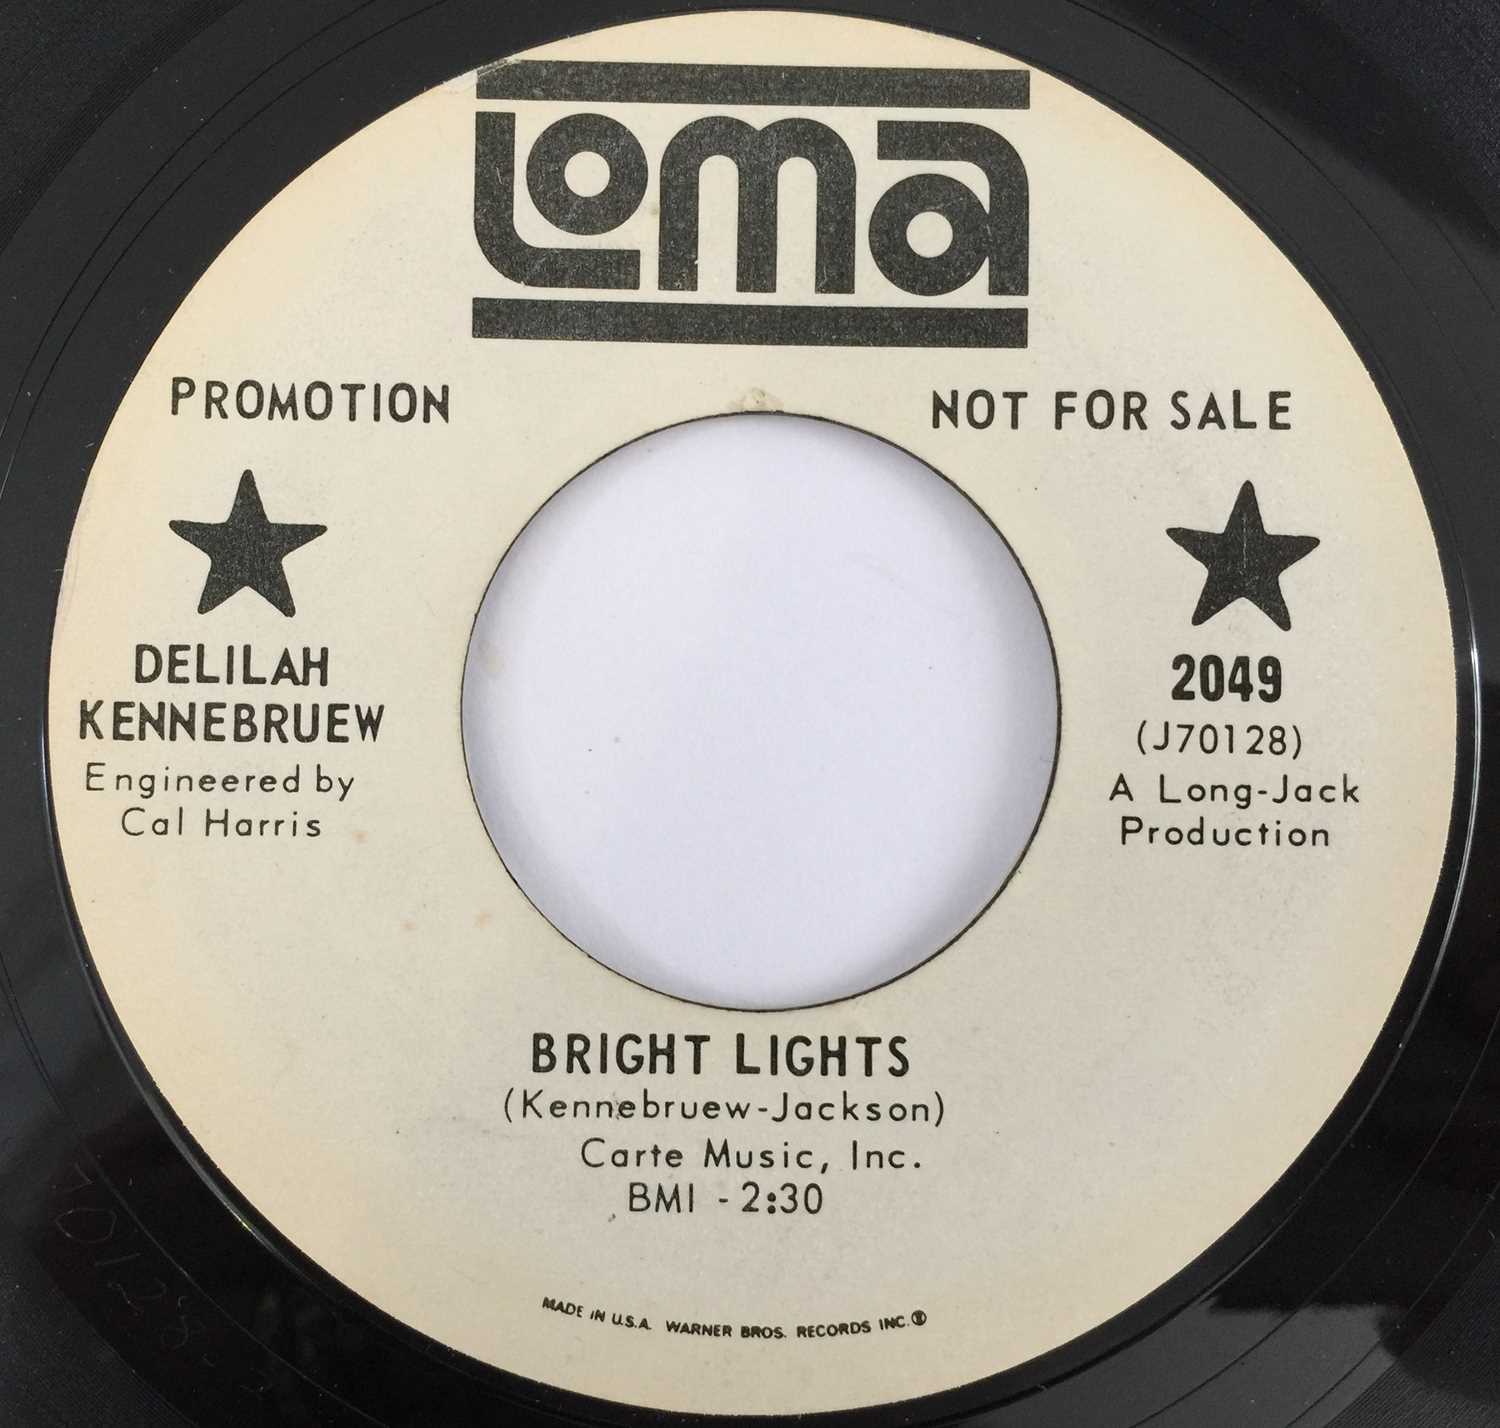 Lot 10 - DELILAH KENNEBRUEW - BRIGHT LIGHTS/ WE'LL BE TOGETHER 7" (US PROMO - LOMA 2049)